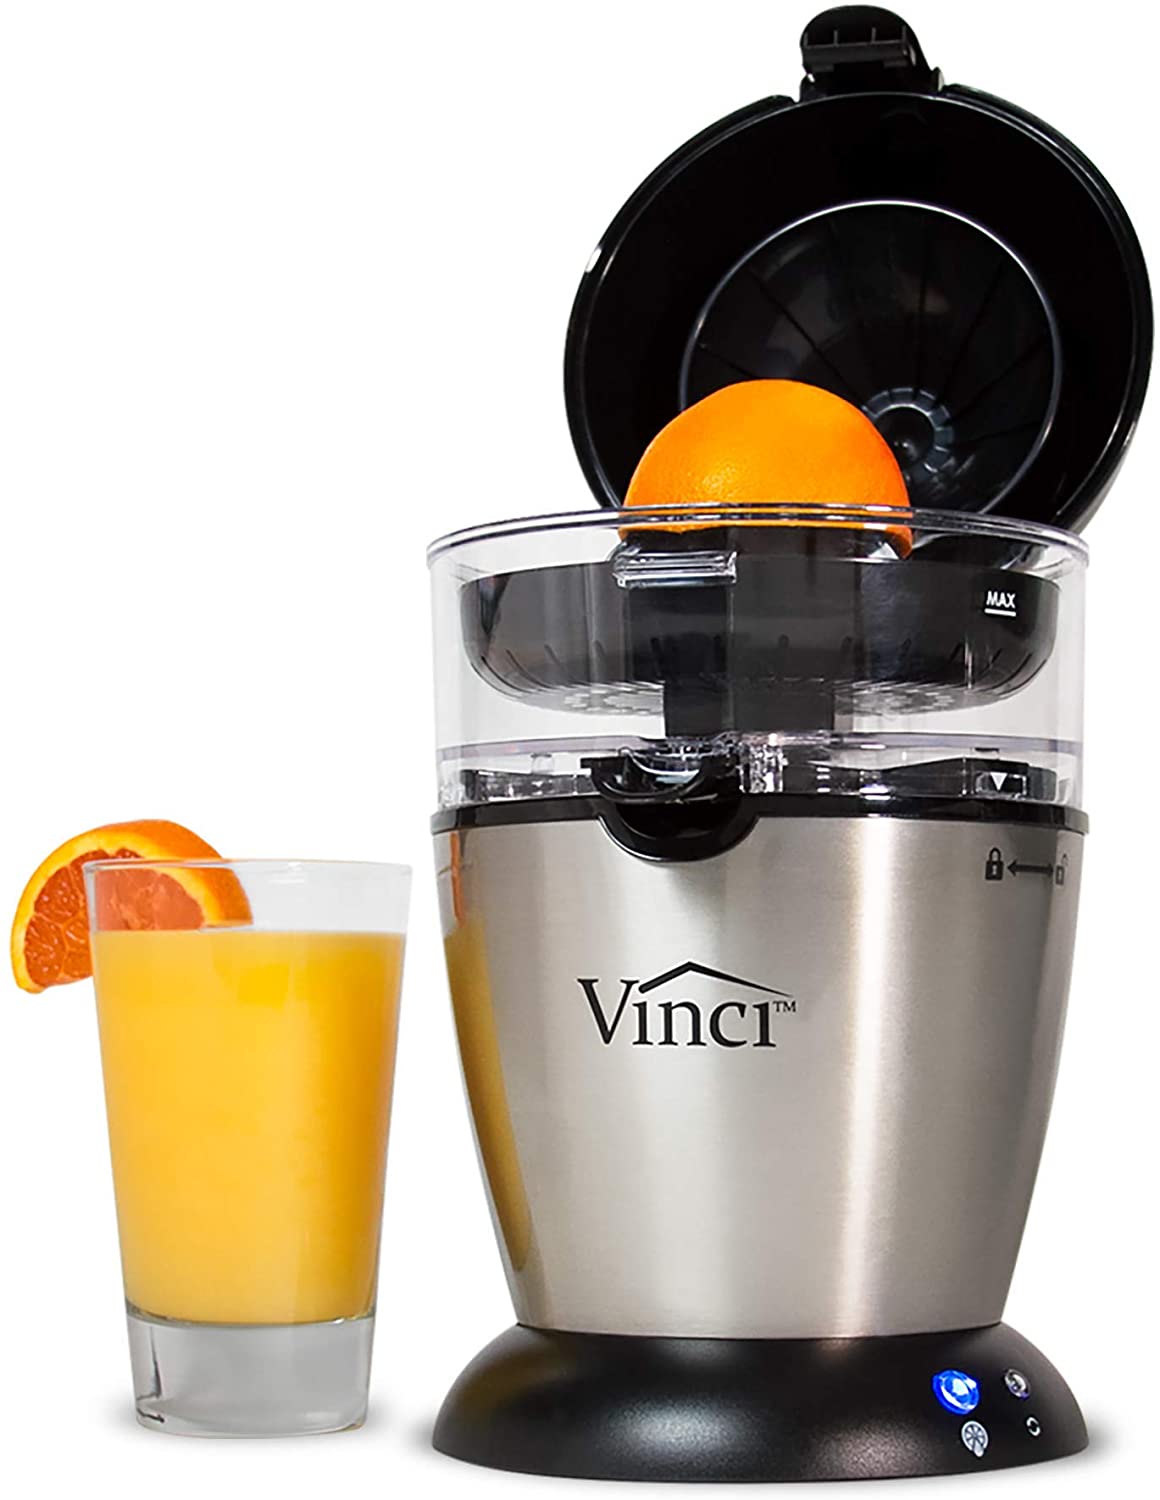 Review of Vinci Hands-Free Electric Citrus Juicer